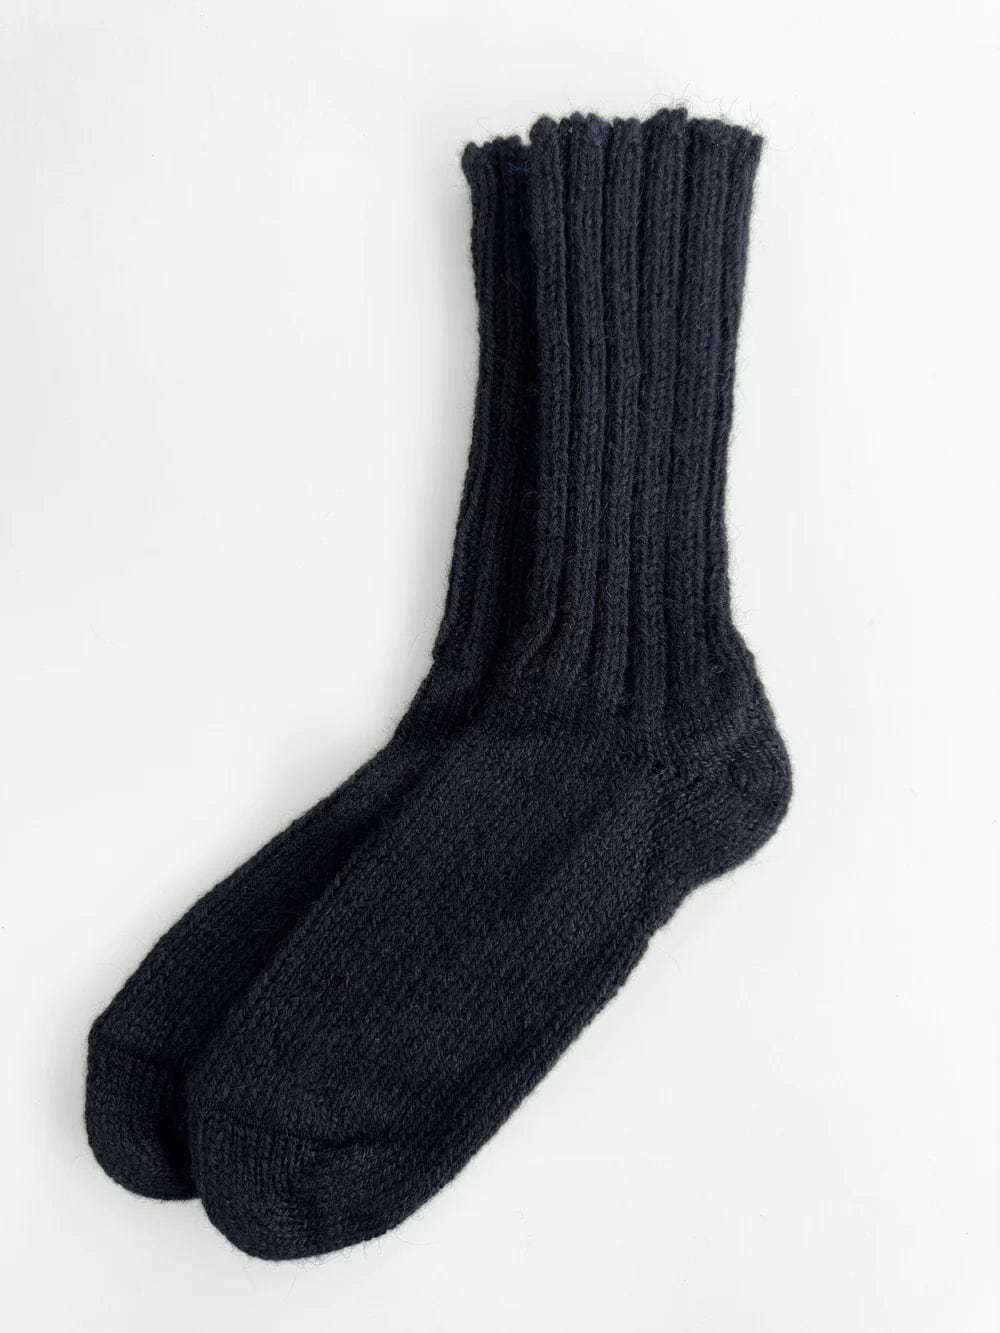 Traditional Icelandic thick wool socks - Black - The Icelandic Store